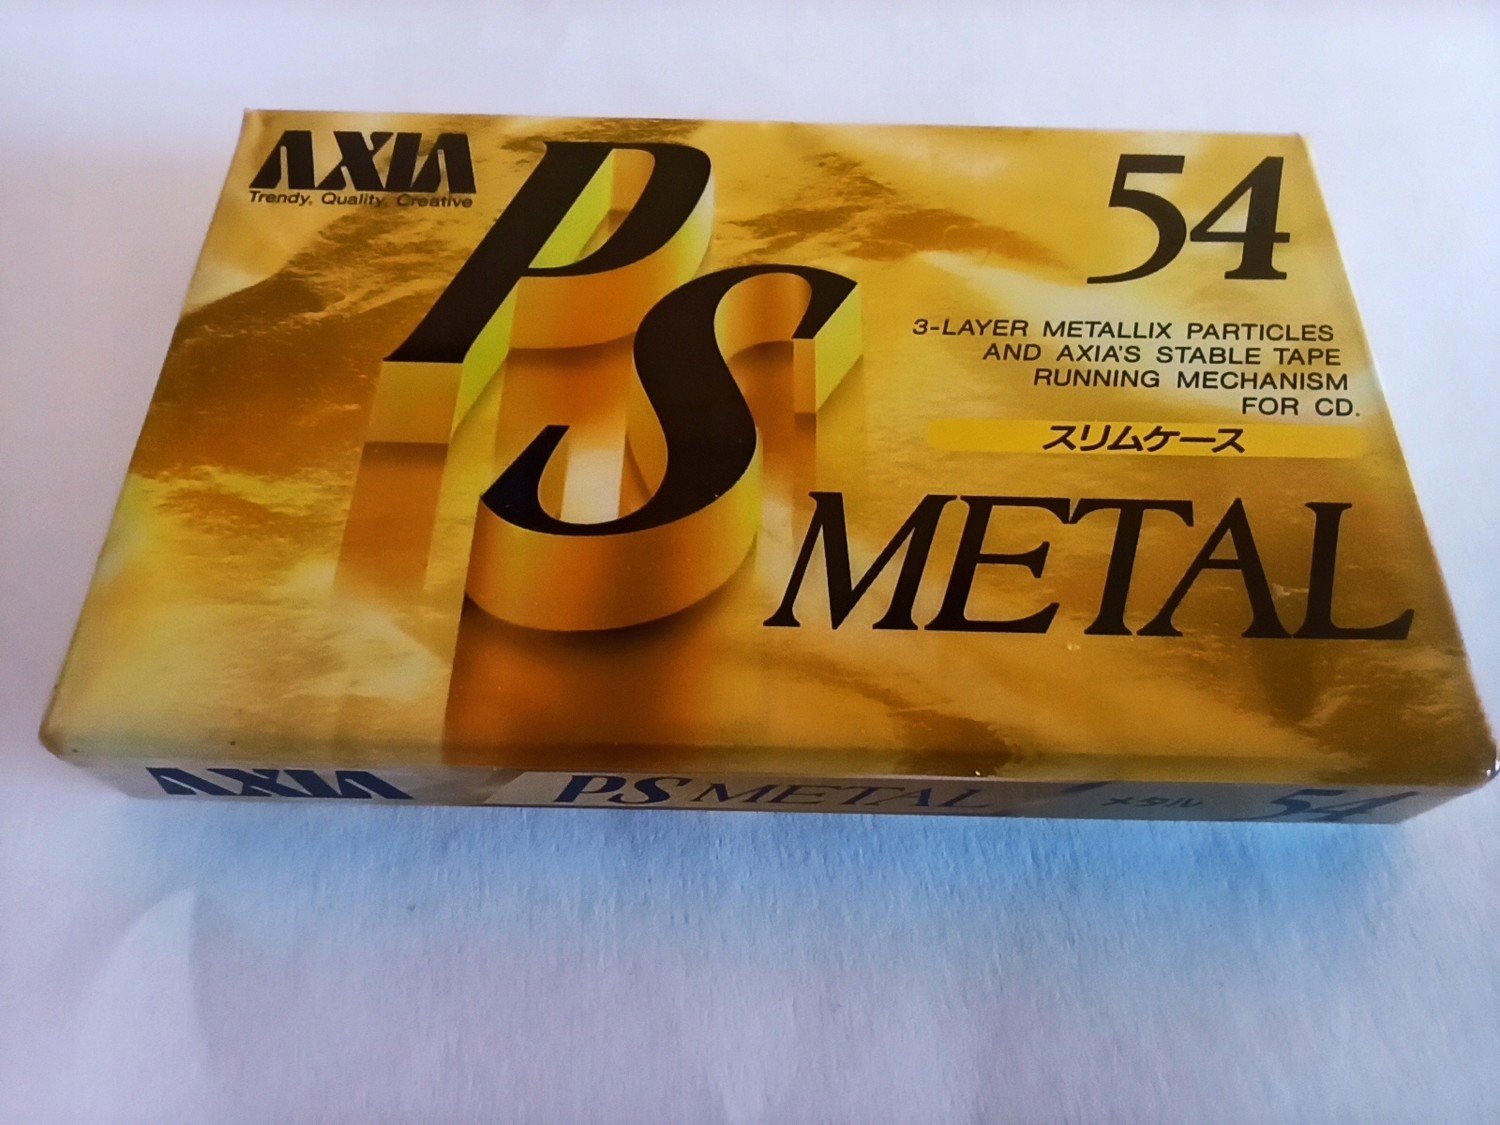 Axia Fuji Ps Metal 54 1993 Japan 1ks